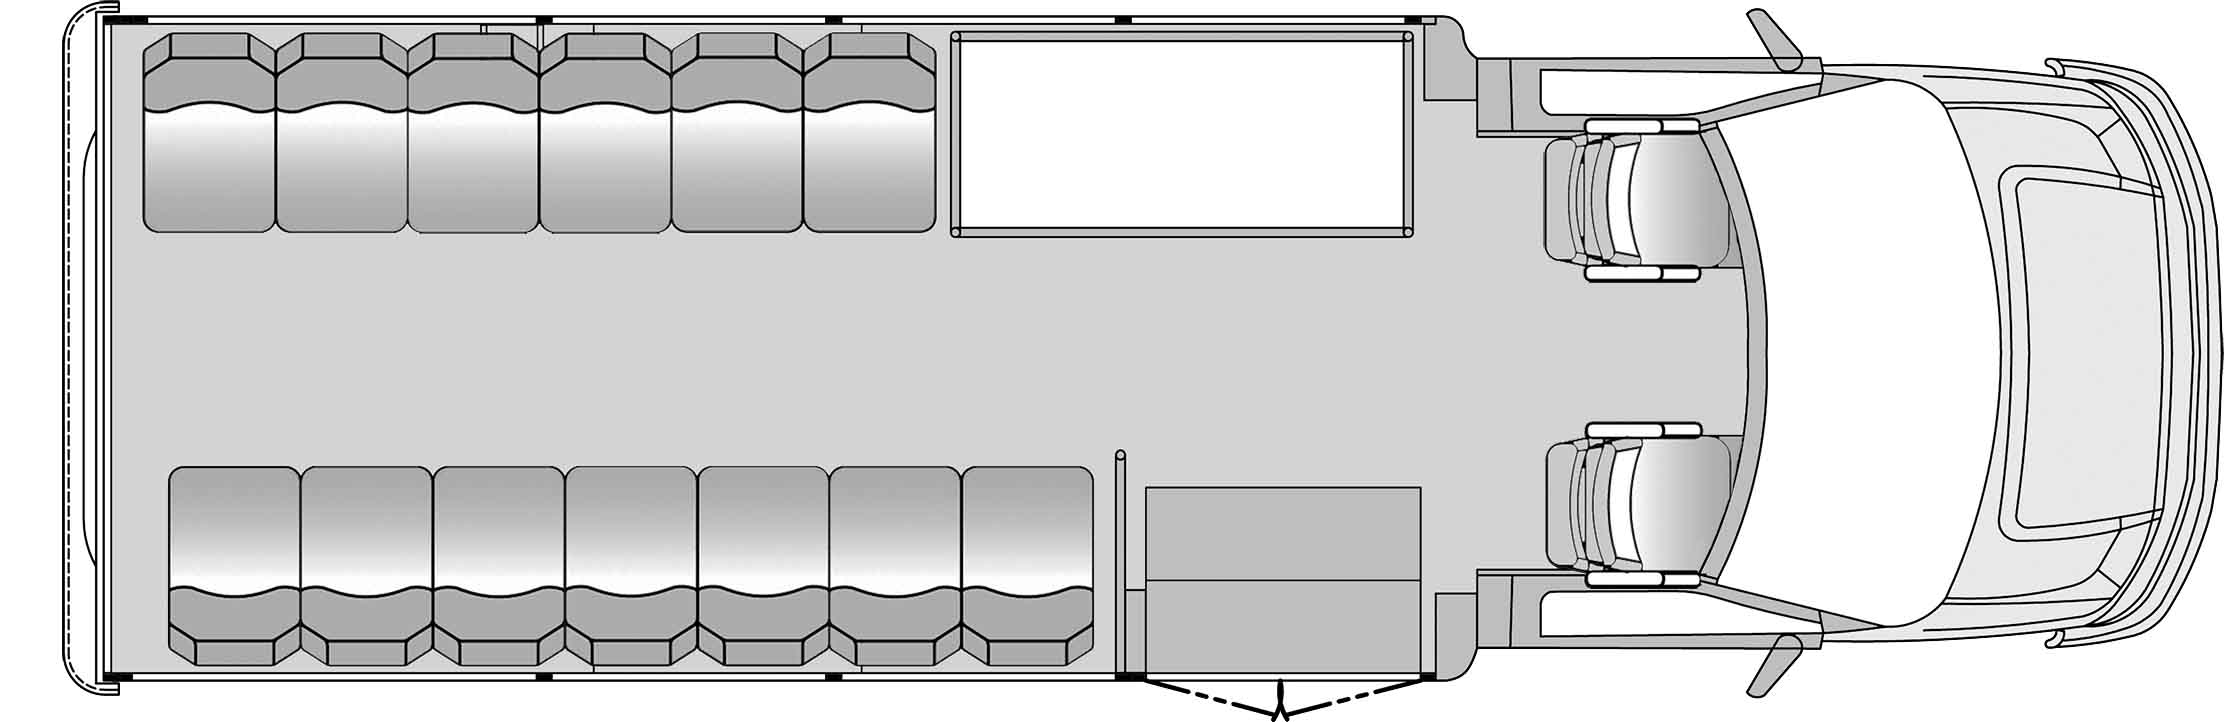 13 Passenger and Interior Luggage Plus Driver and Copilot Floorplan Image